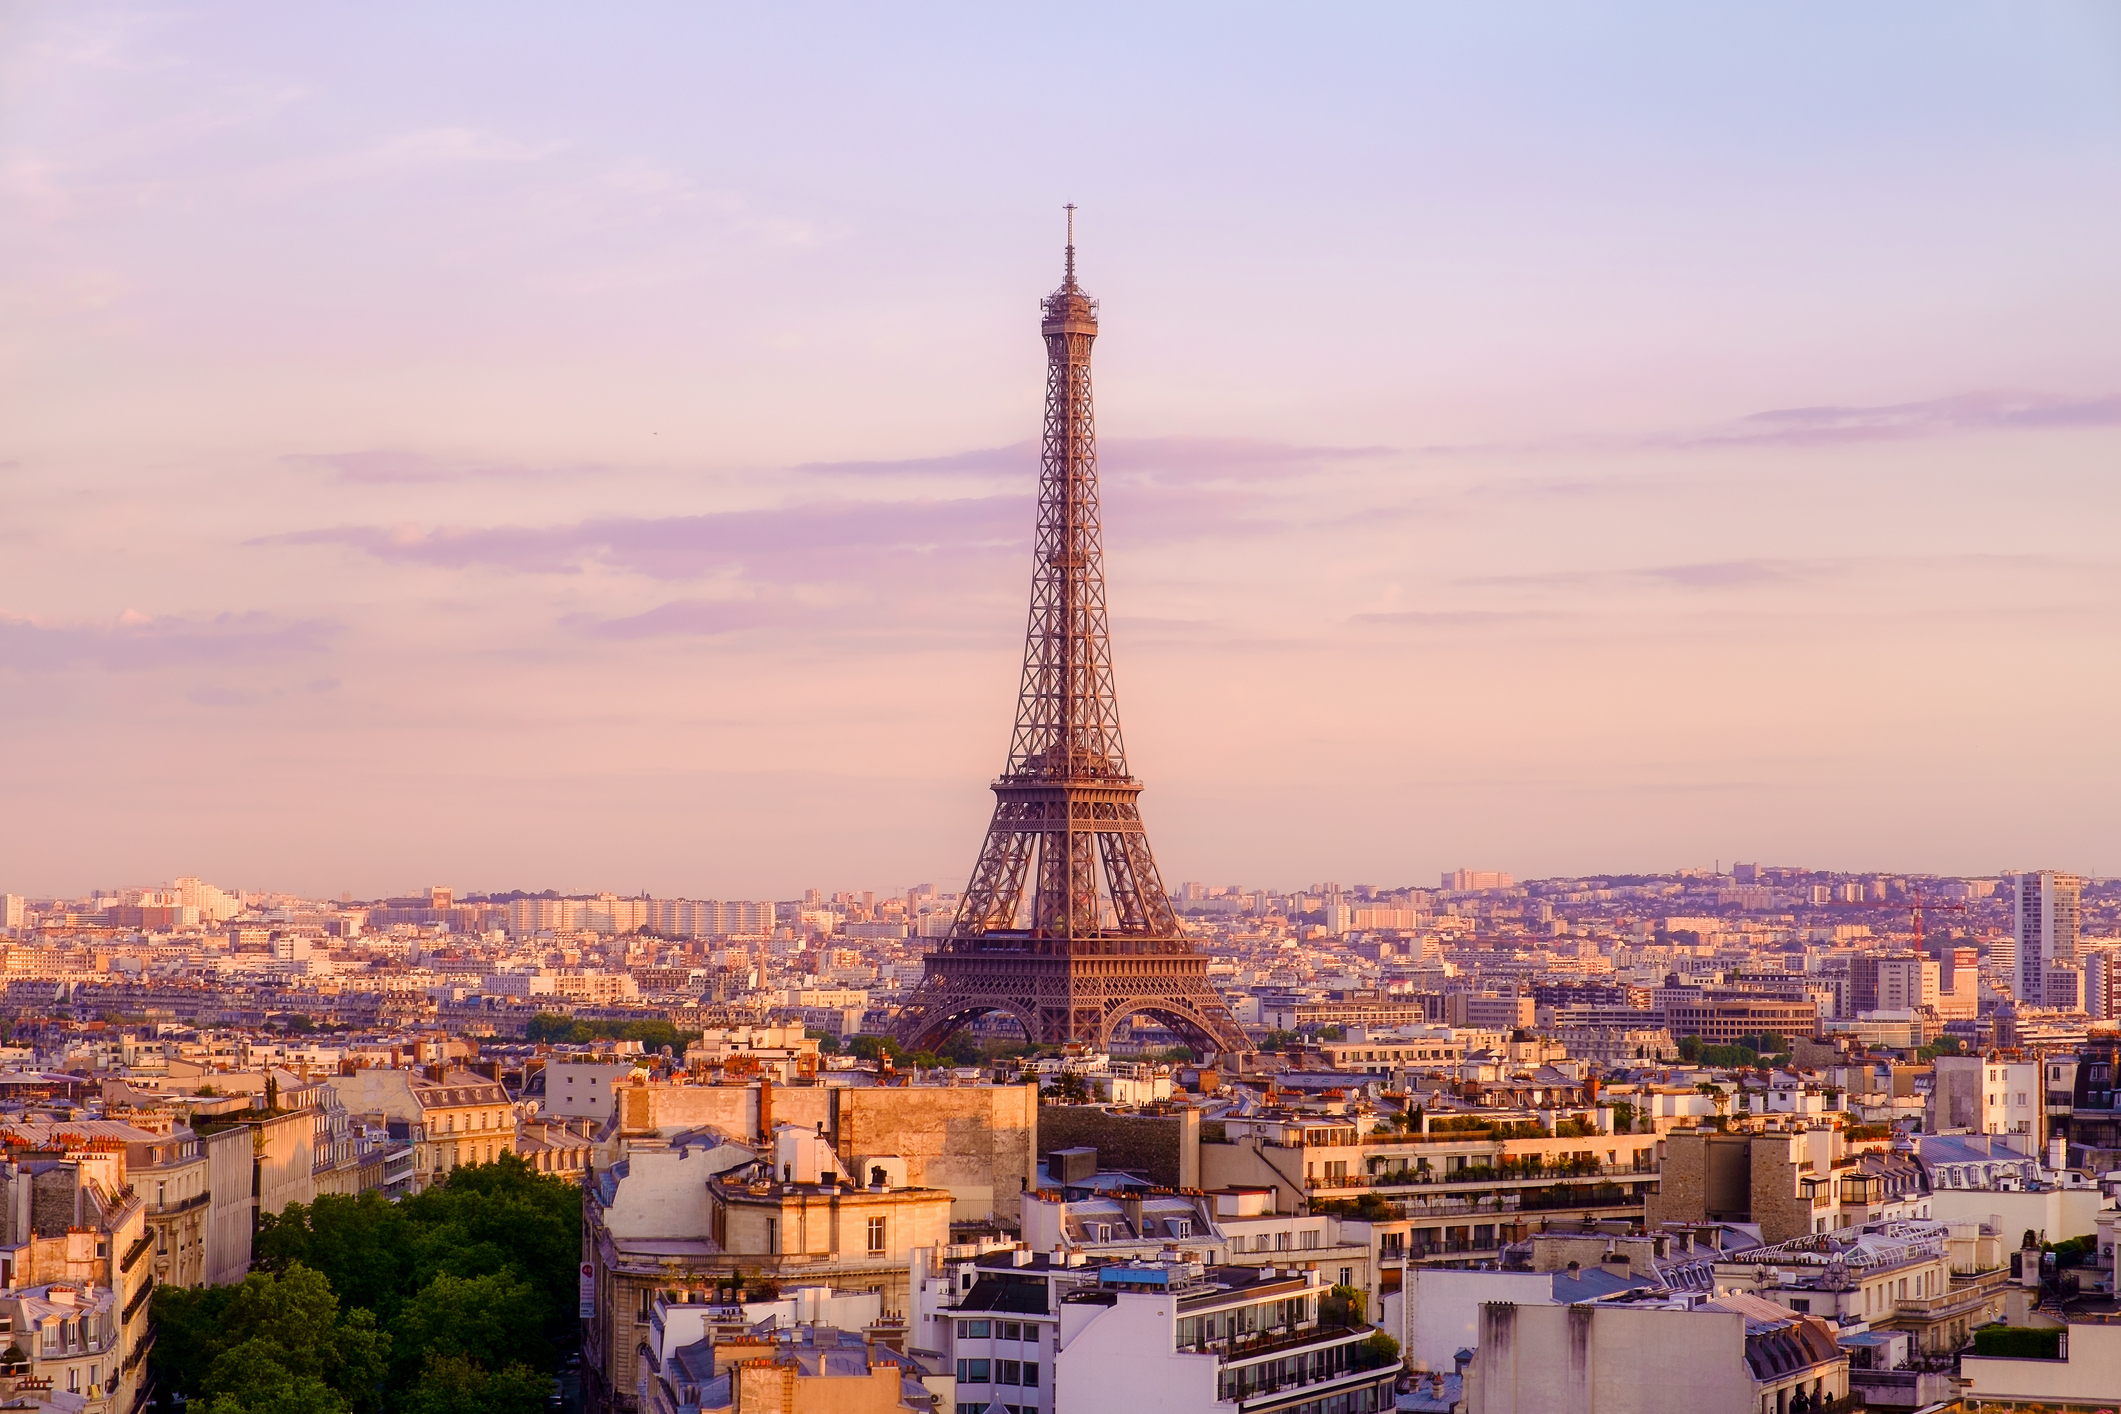 TripAdvisor: Top hotel for romance is in Paris